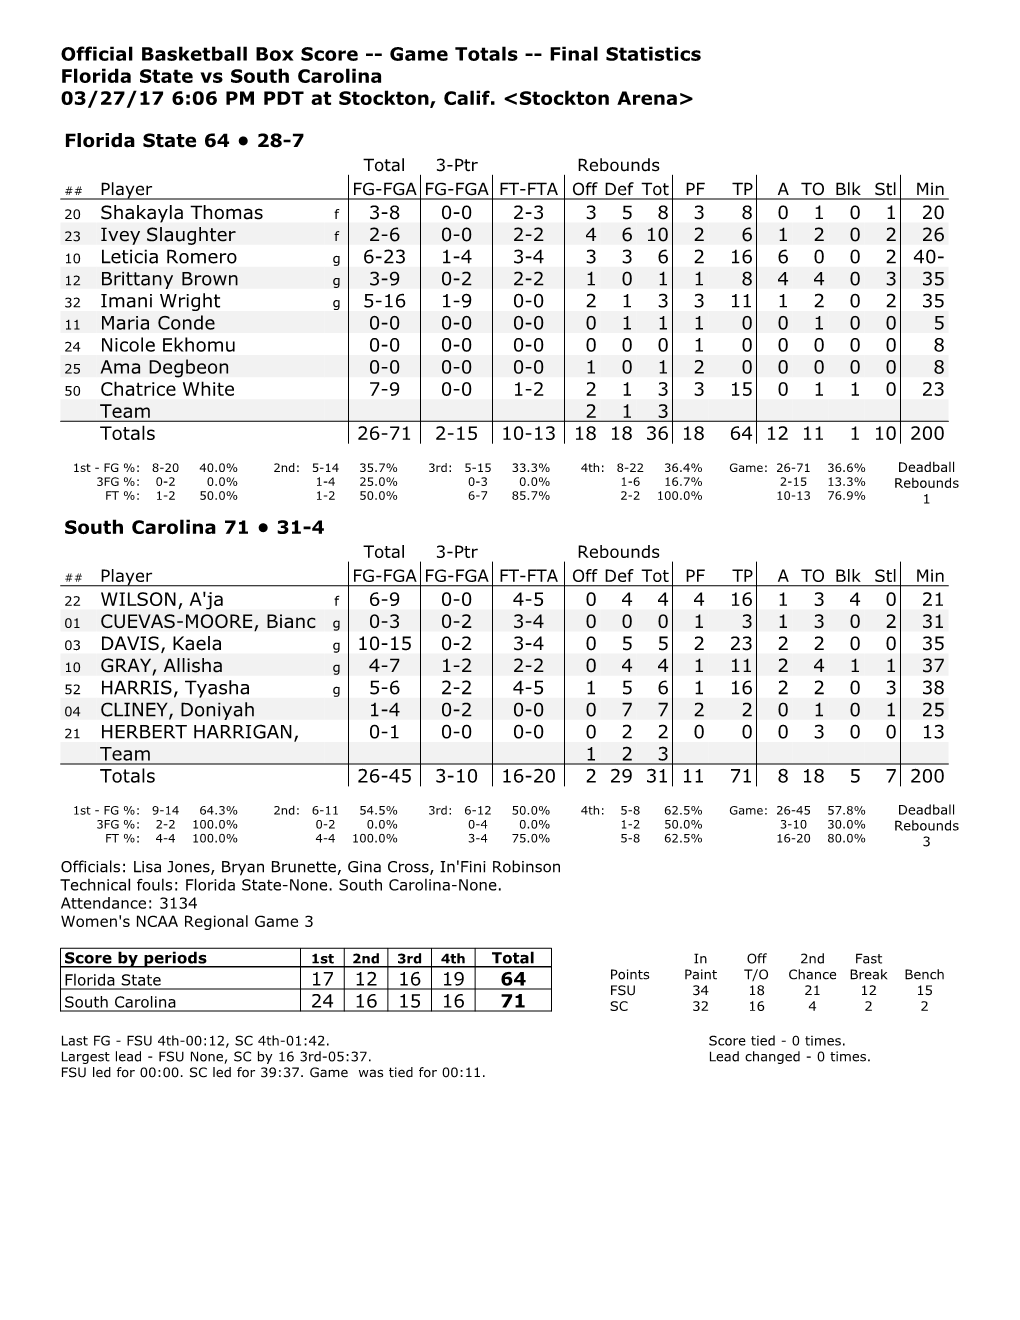 Official Basketball Box Score -- Game Totals -- Final Statistics Florida State Vs South Carolina 03/27/17 6:06 PM PDT at Stockton, Calif